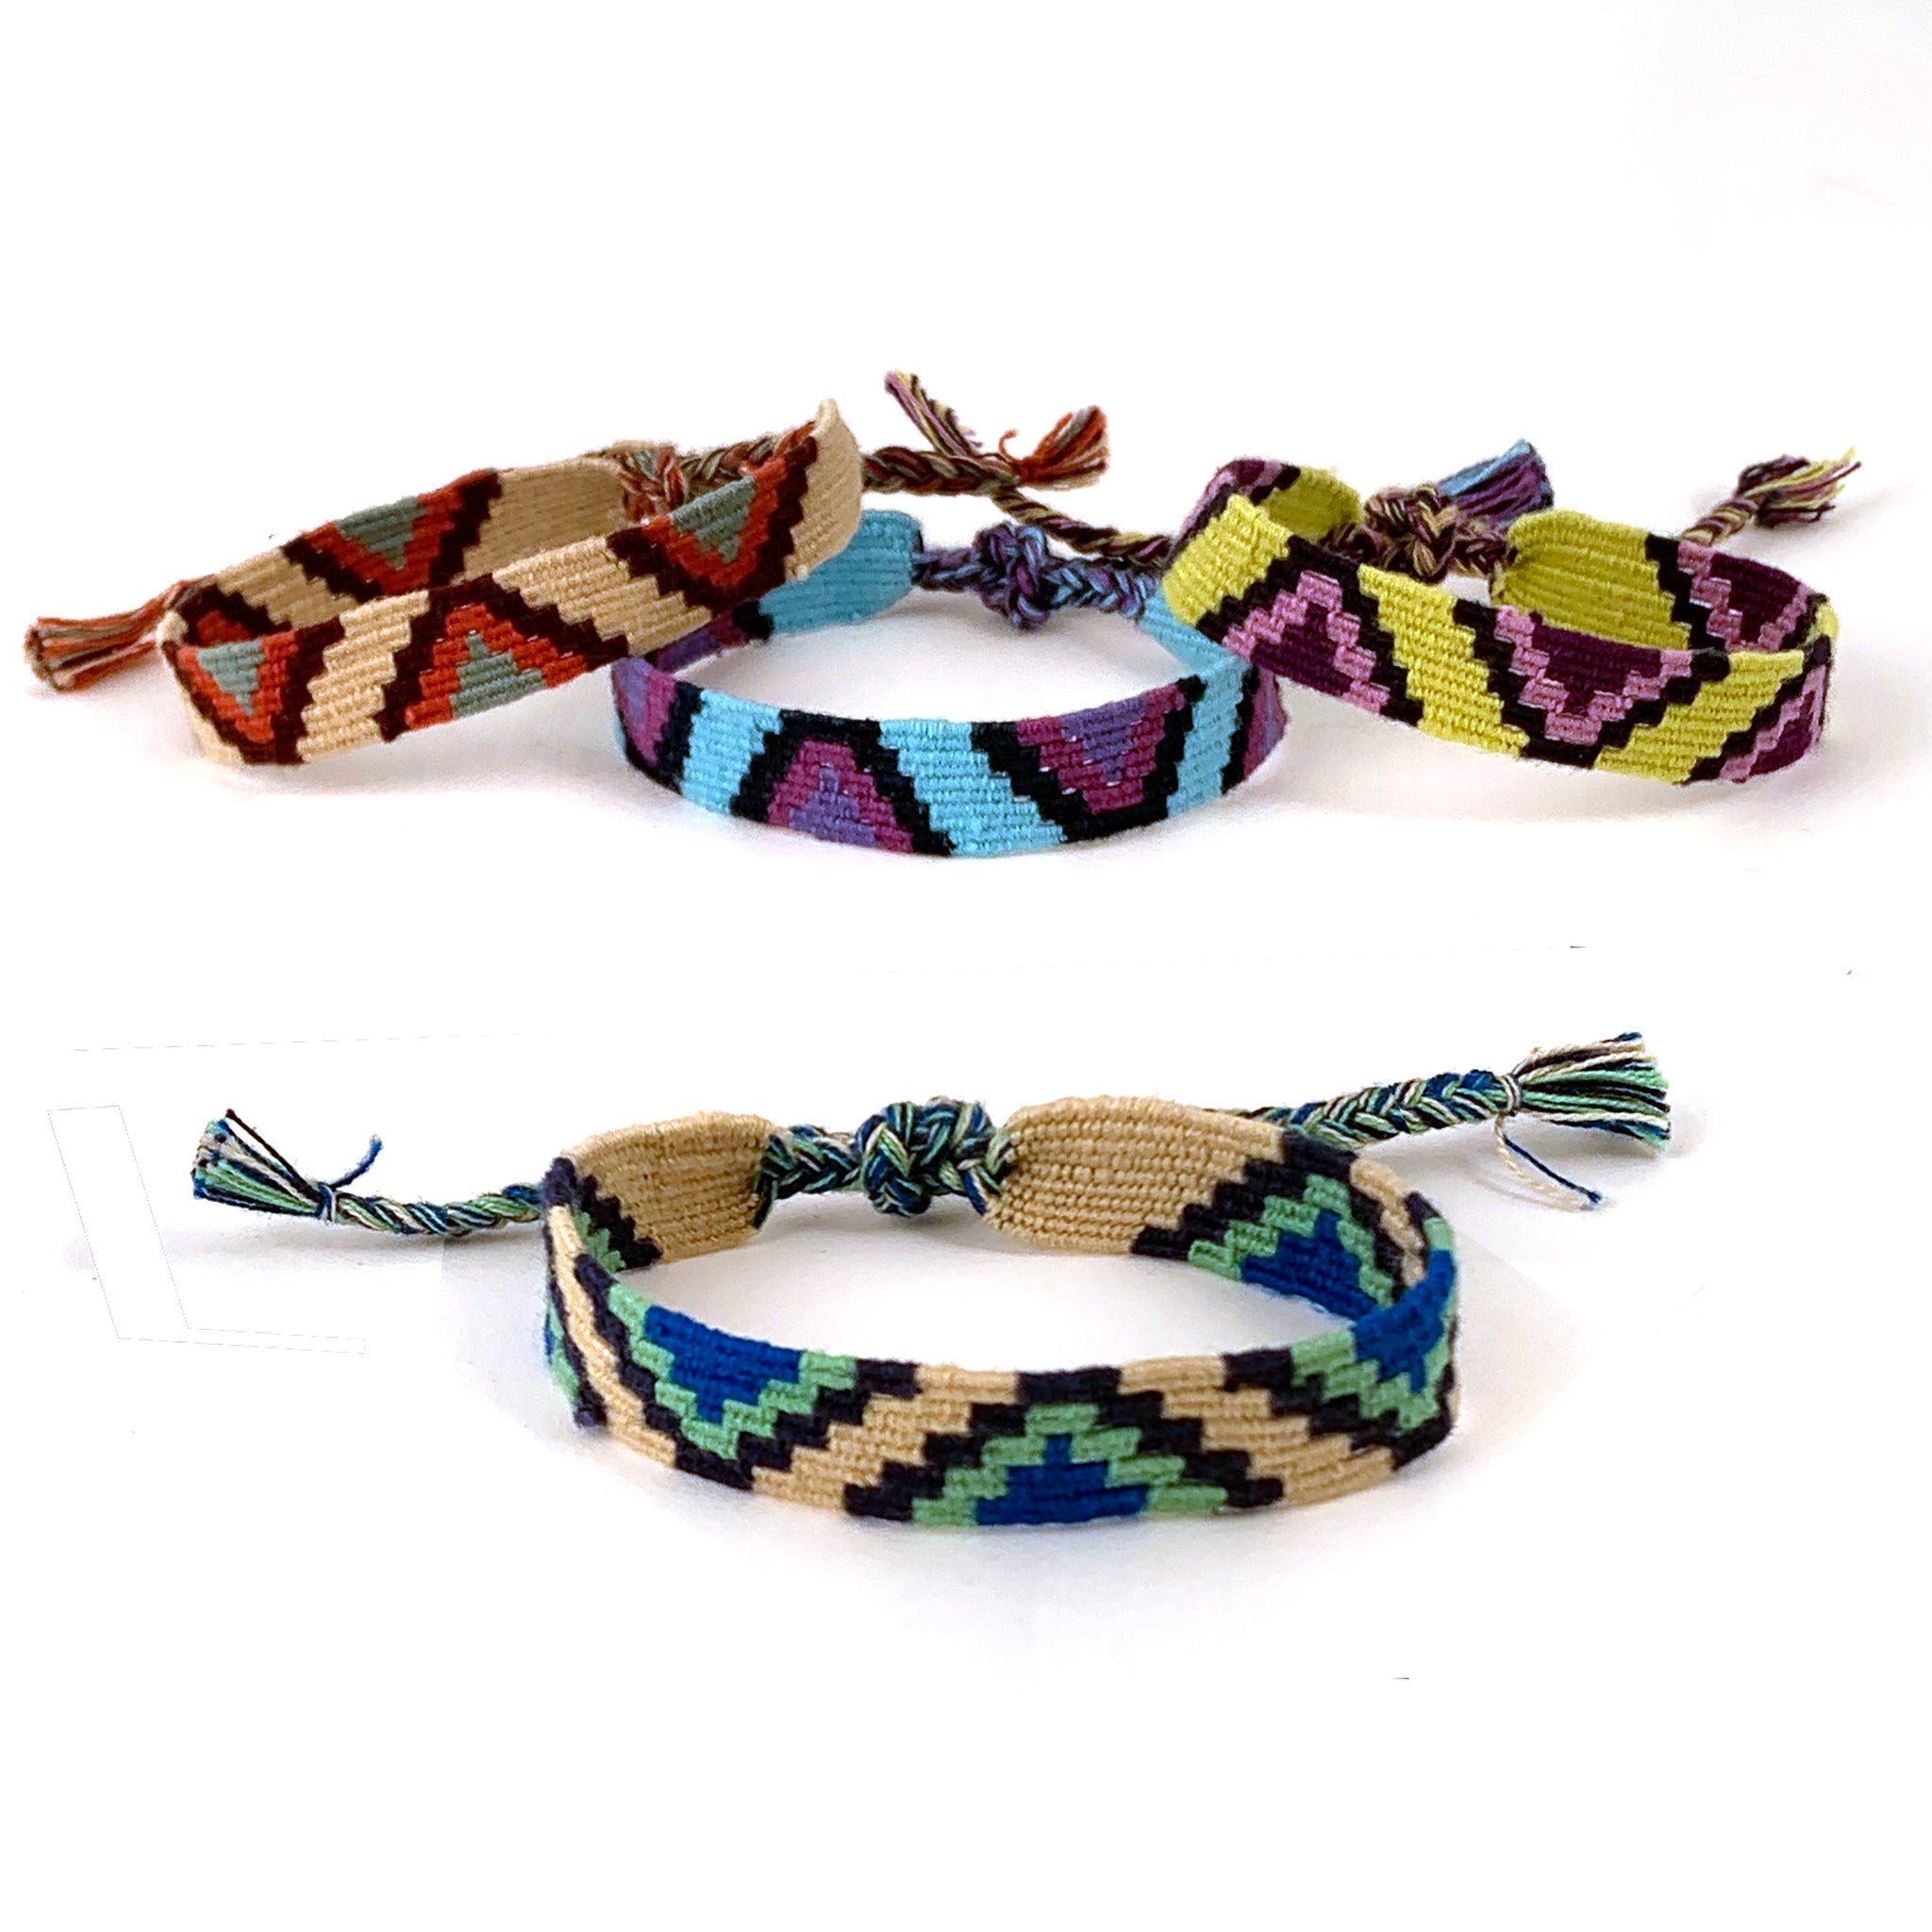 Traditional Friendship Bracelet | Fair Trade Bracelet Handmade in Guatemala  - Mayan Hands